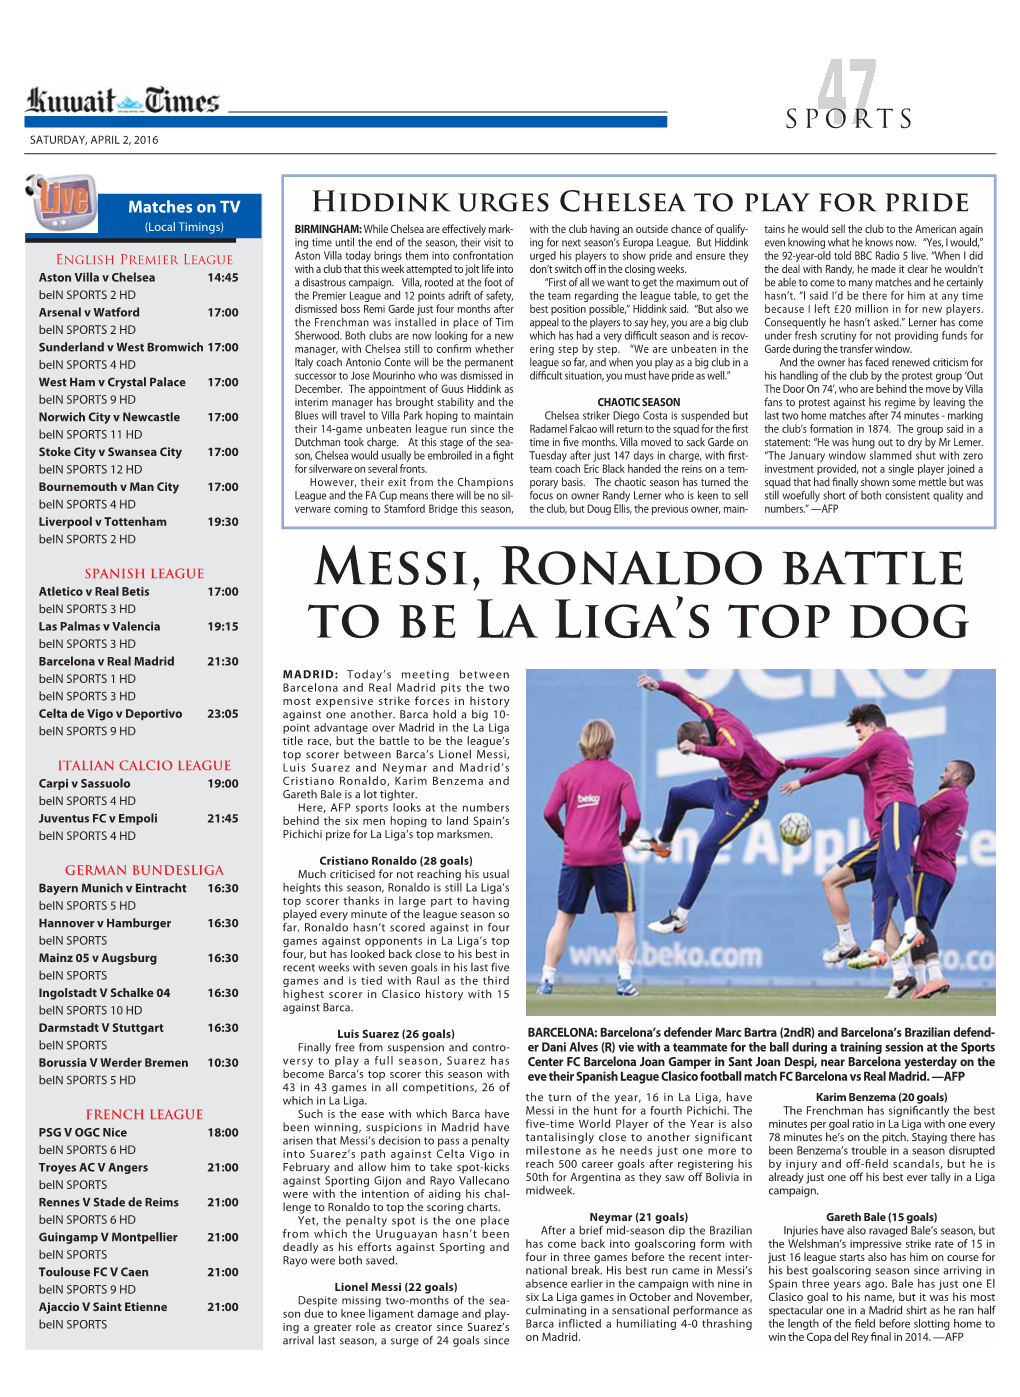 Messi, Ronaldo Battle to Be La Liga's Top